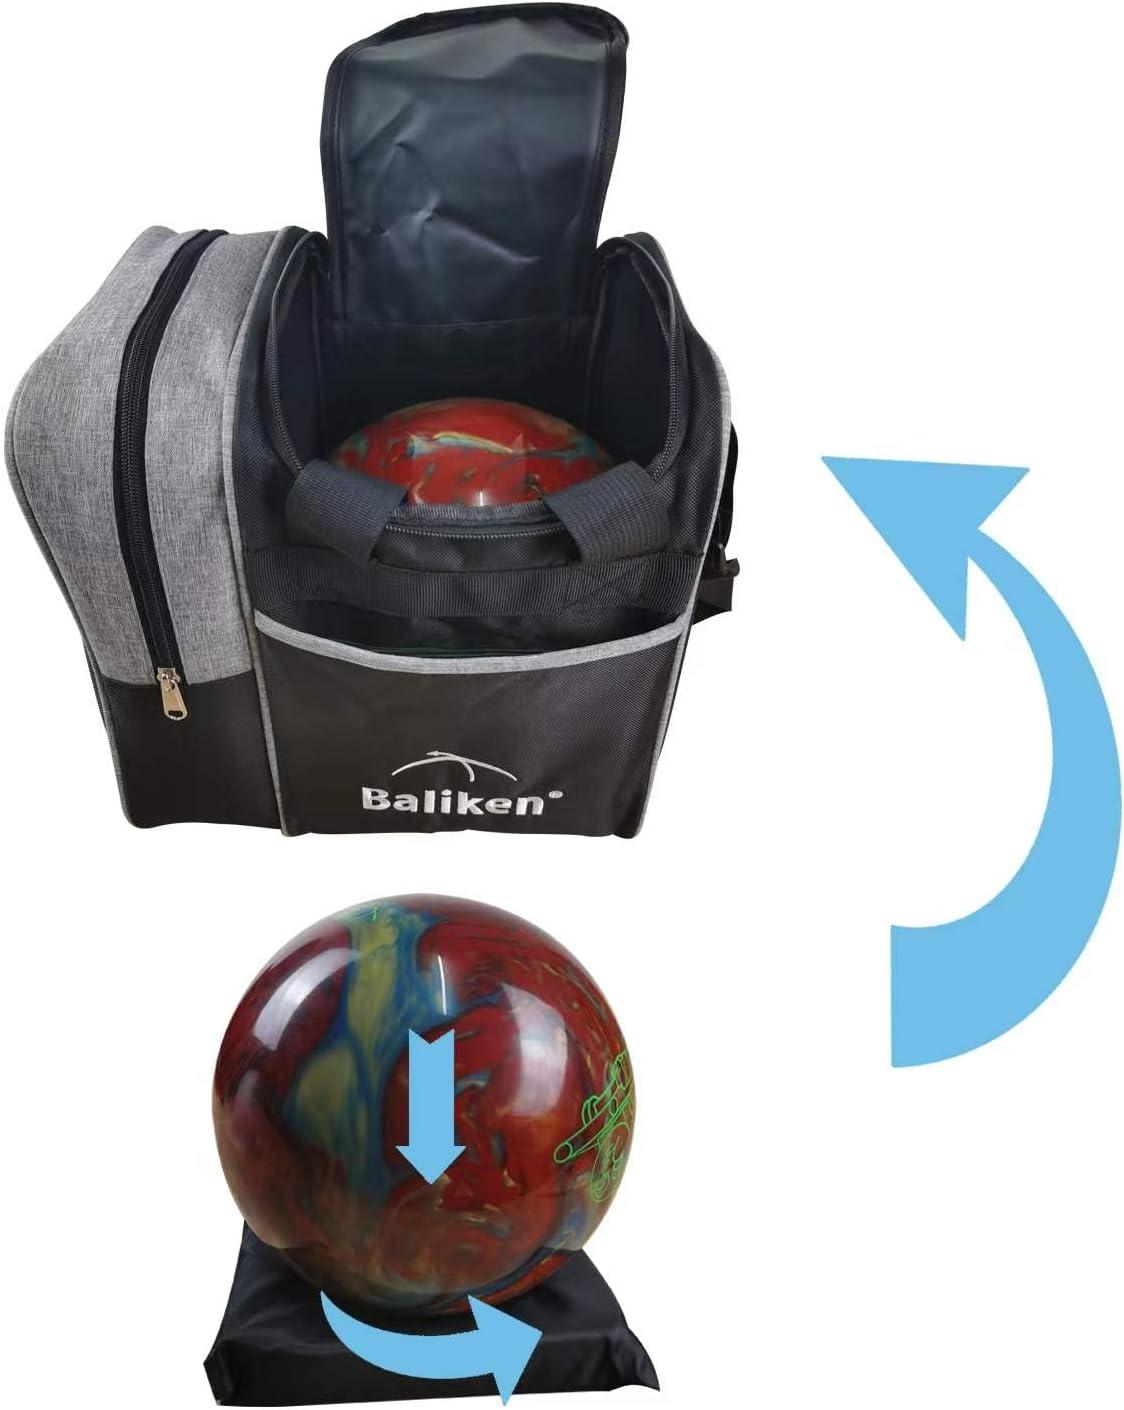  BALIKEN Single Bowling Ball Tote Bag Holds One